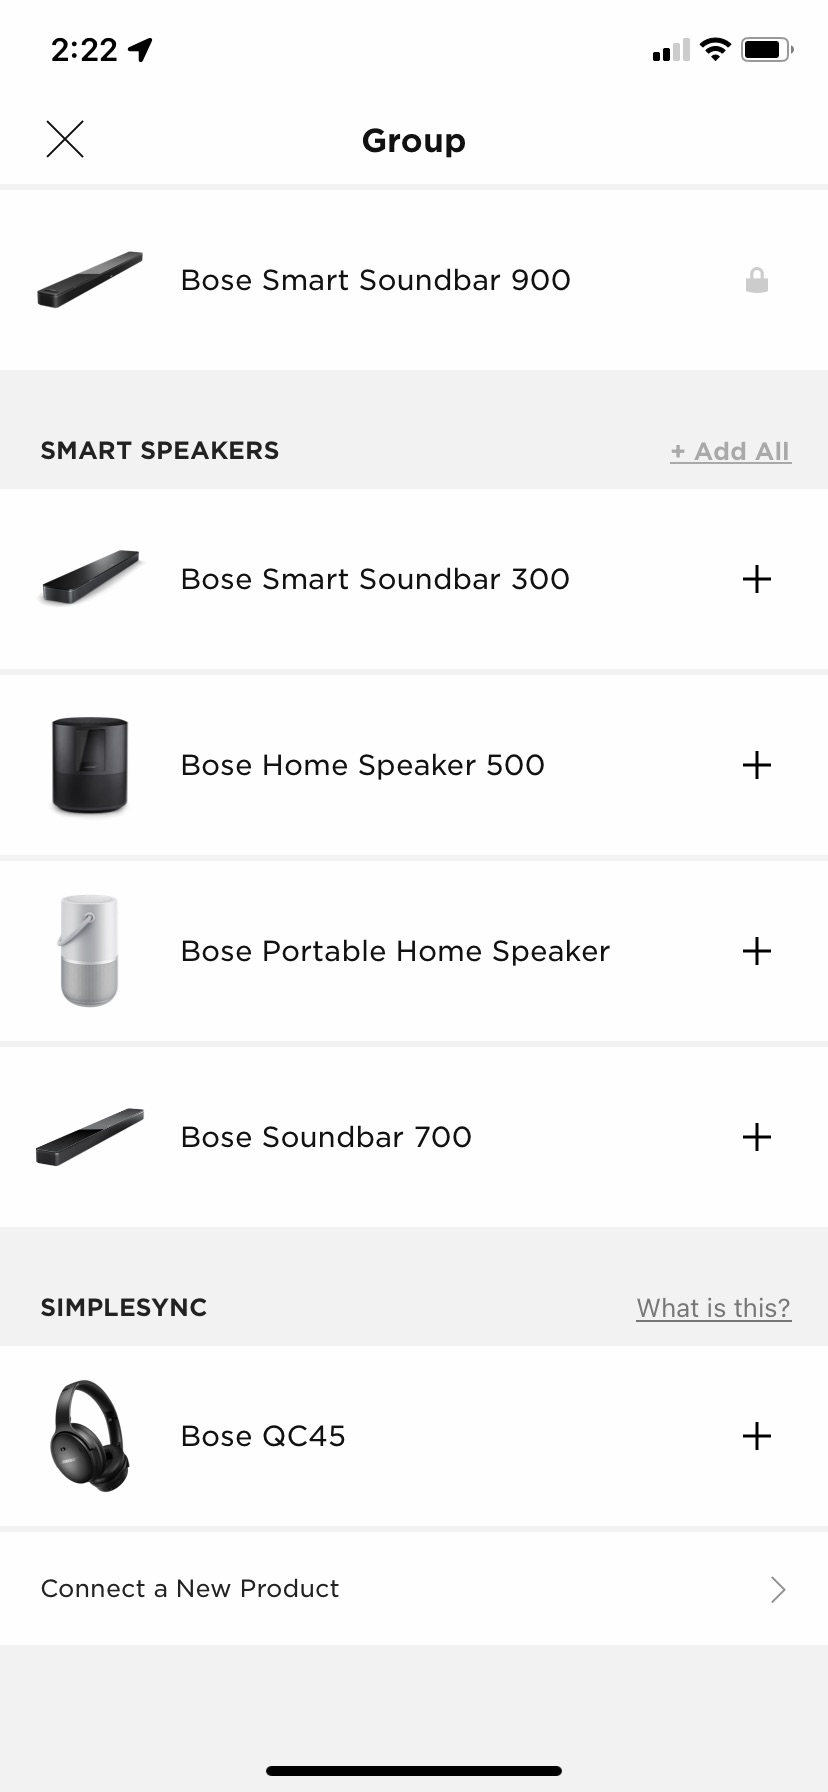 900 vs 700 - Bose Smart Soundbar 